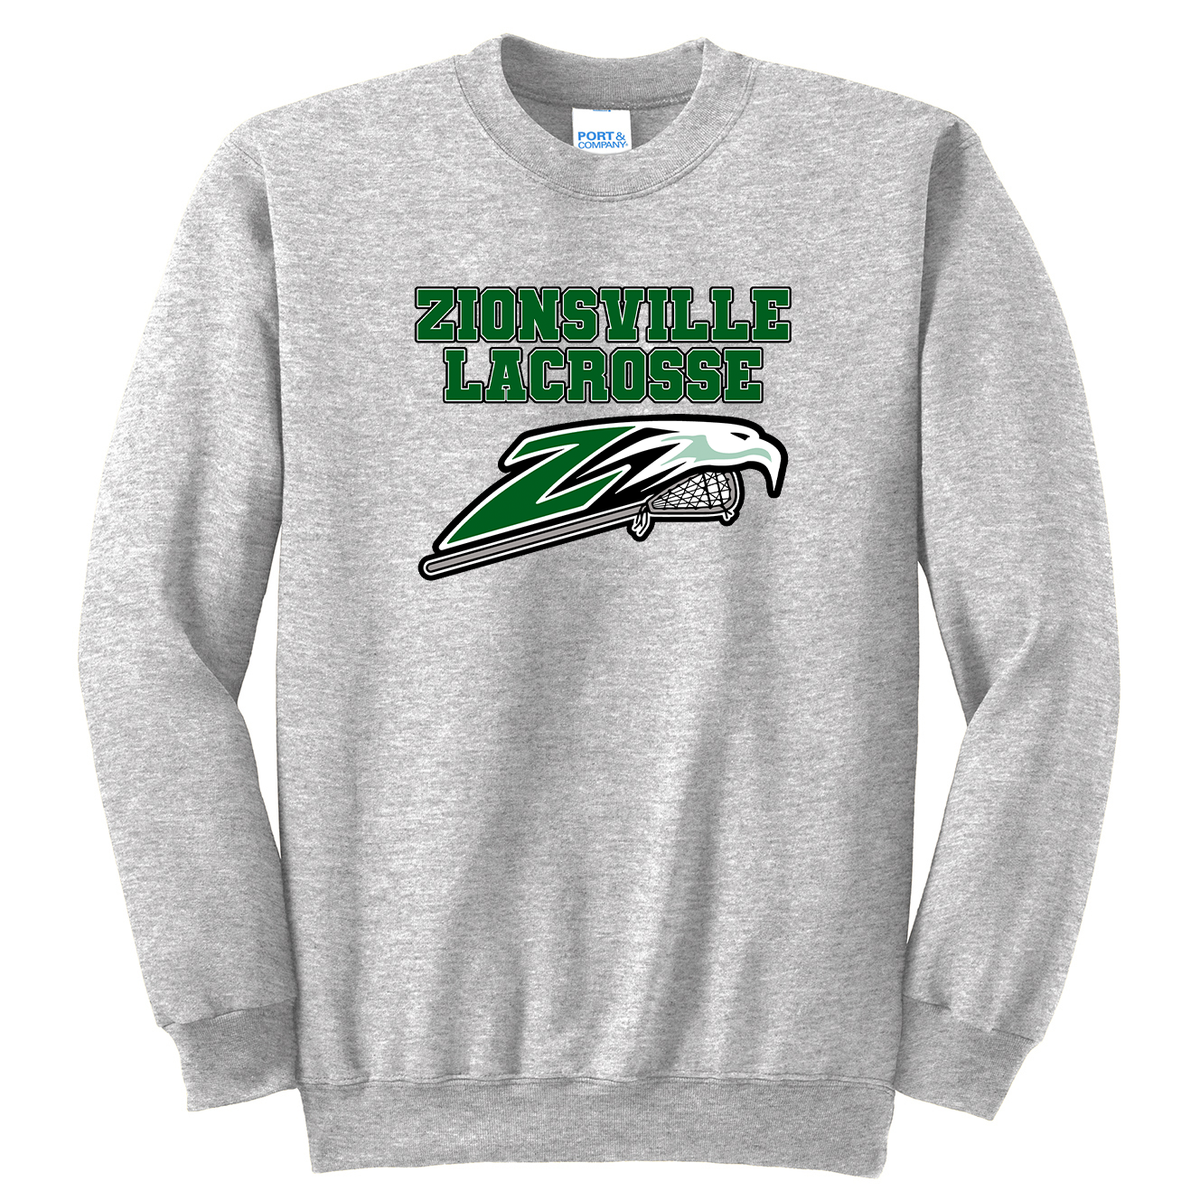 Zionsville Lacrosse Crew Neck Sweater